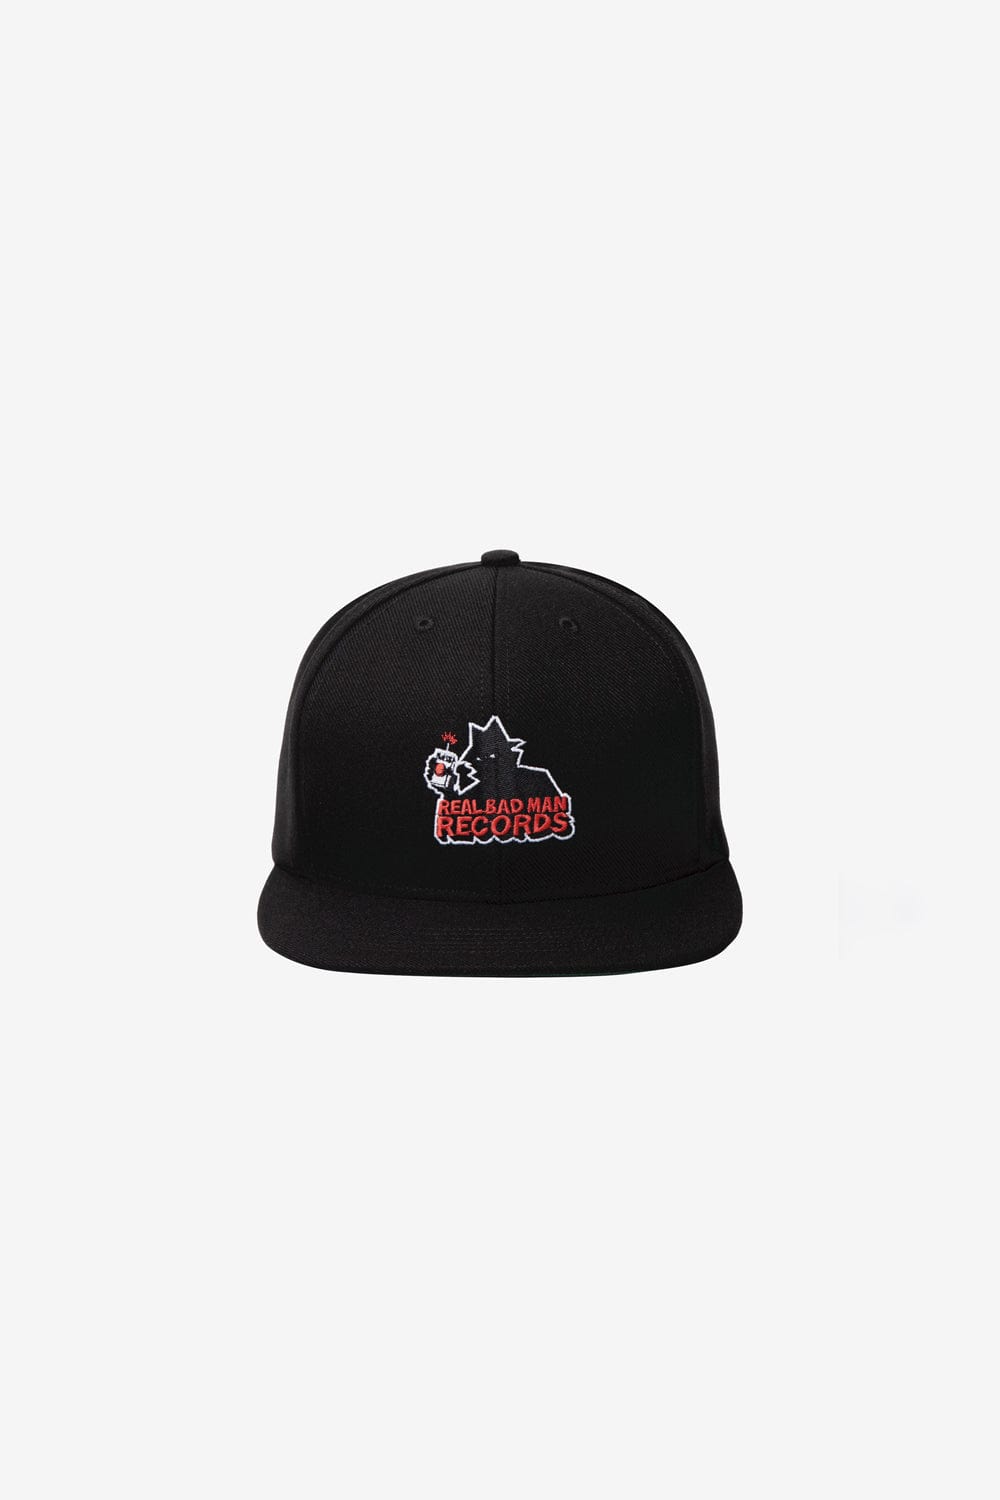 RBM Records Swap Meet Hat